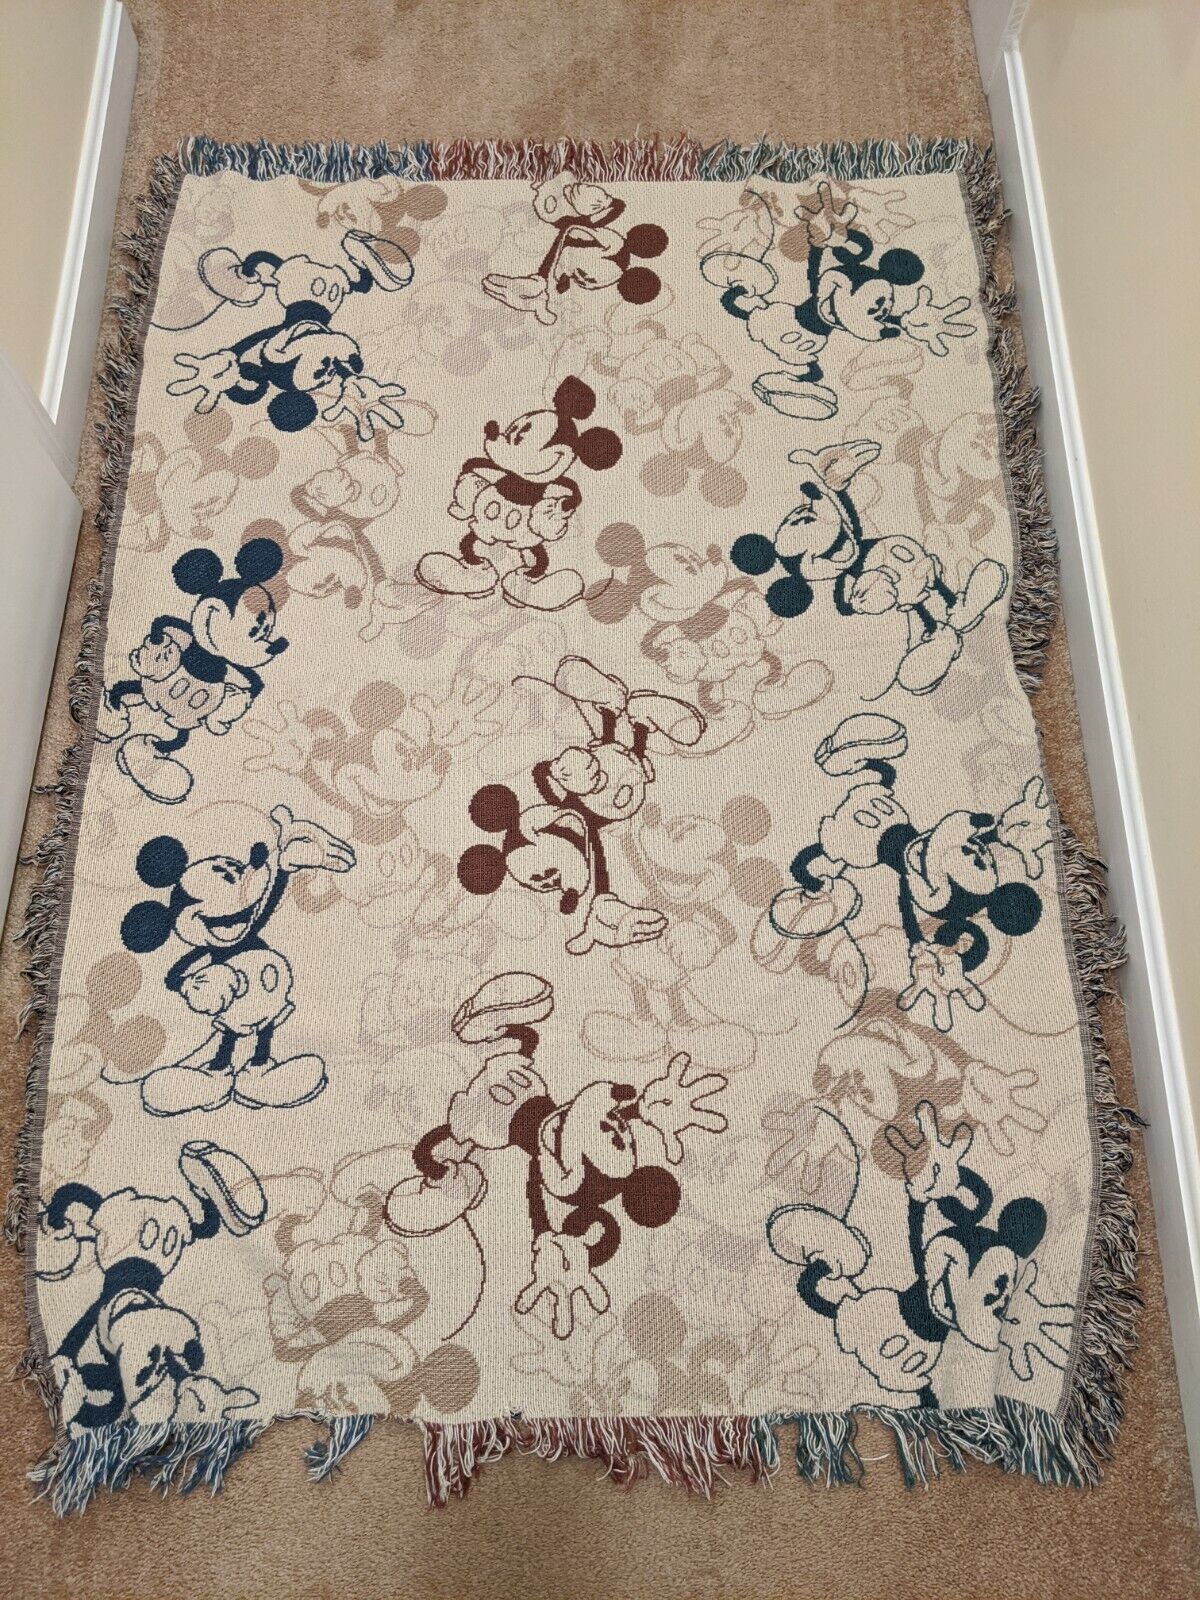 Disney Parks Authentic Original Mickey Mouse Fringed Hem Throw Blanket 42x58 EUC - $27.74